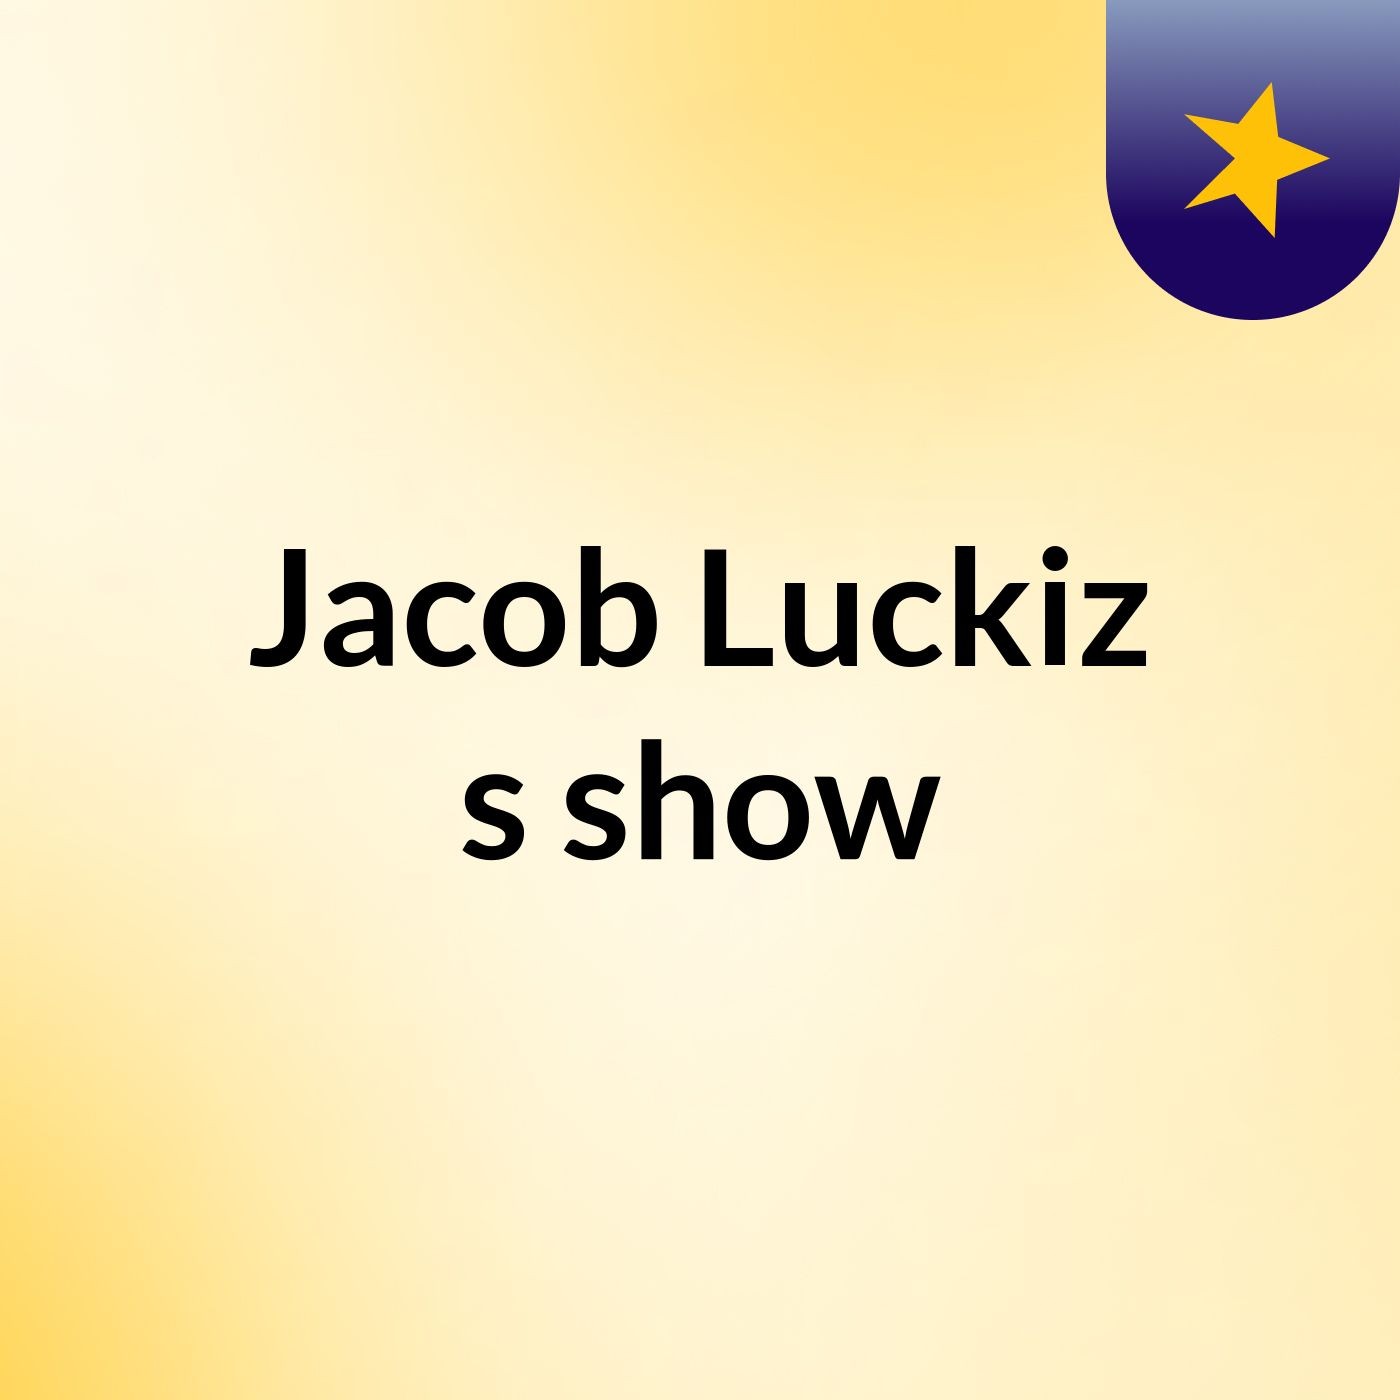 Episode 2 - Jacob Luckiz's show